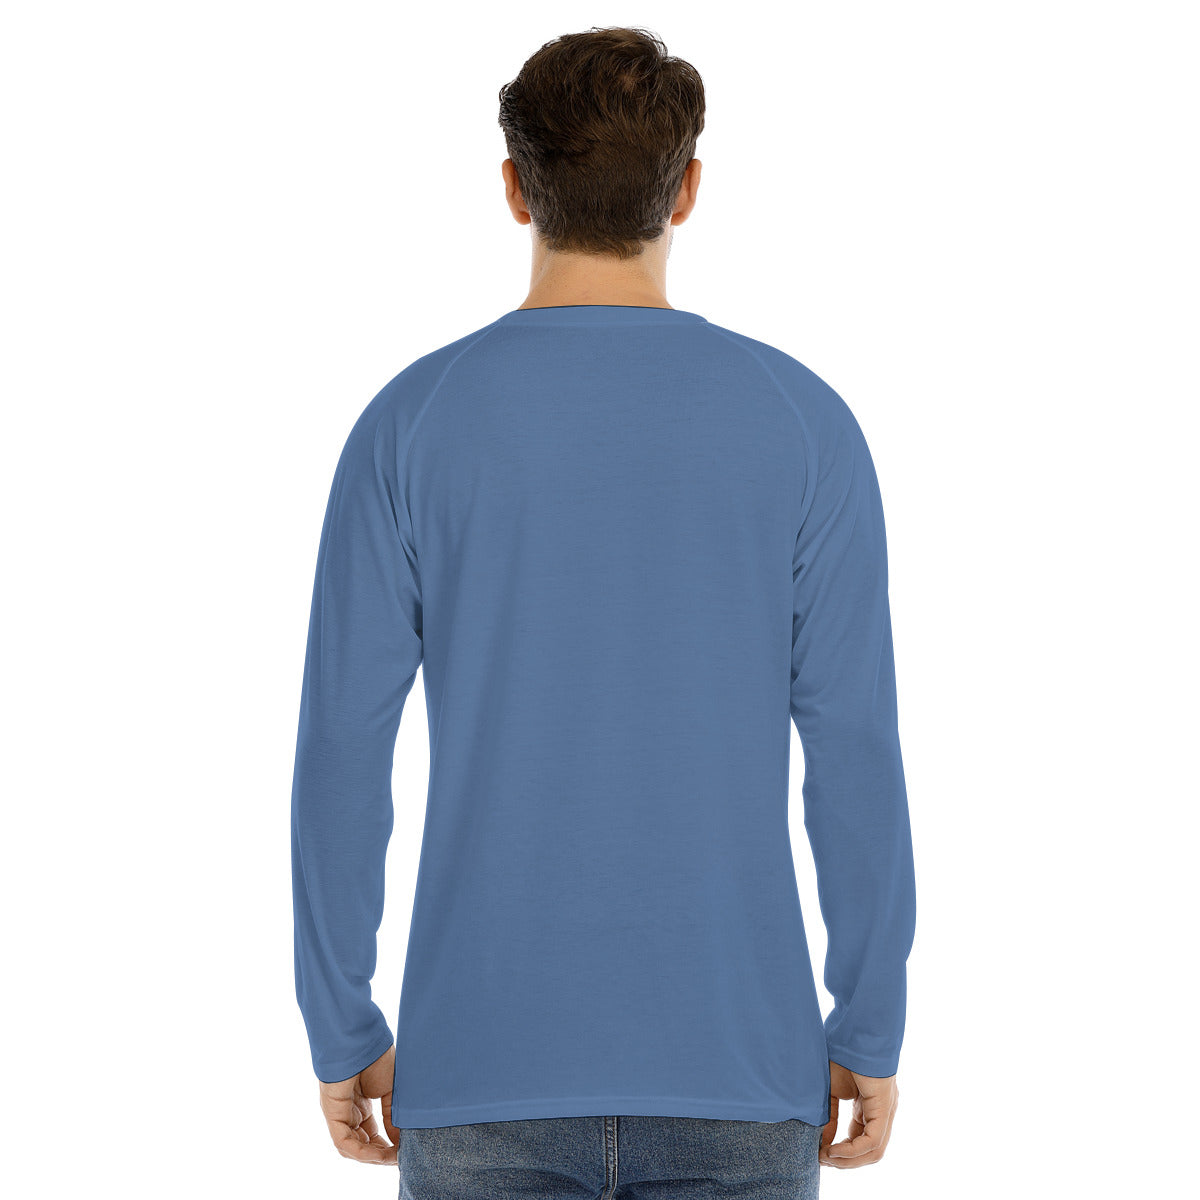 Arizona Sky 101 -- Men's Long Sleeve T-shirt With Raglan Sleeve